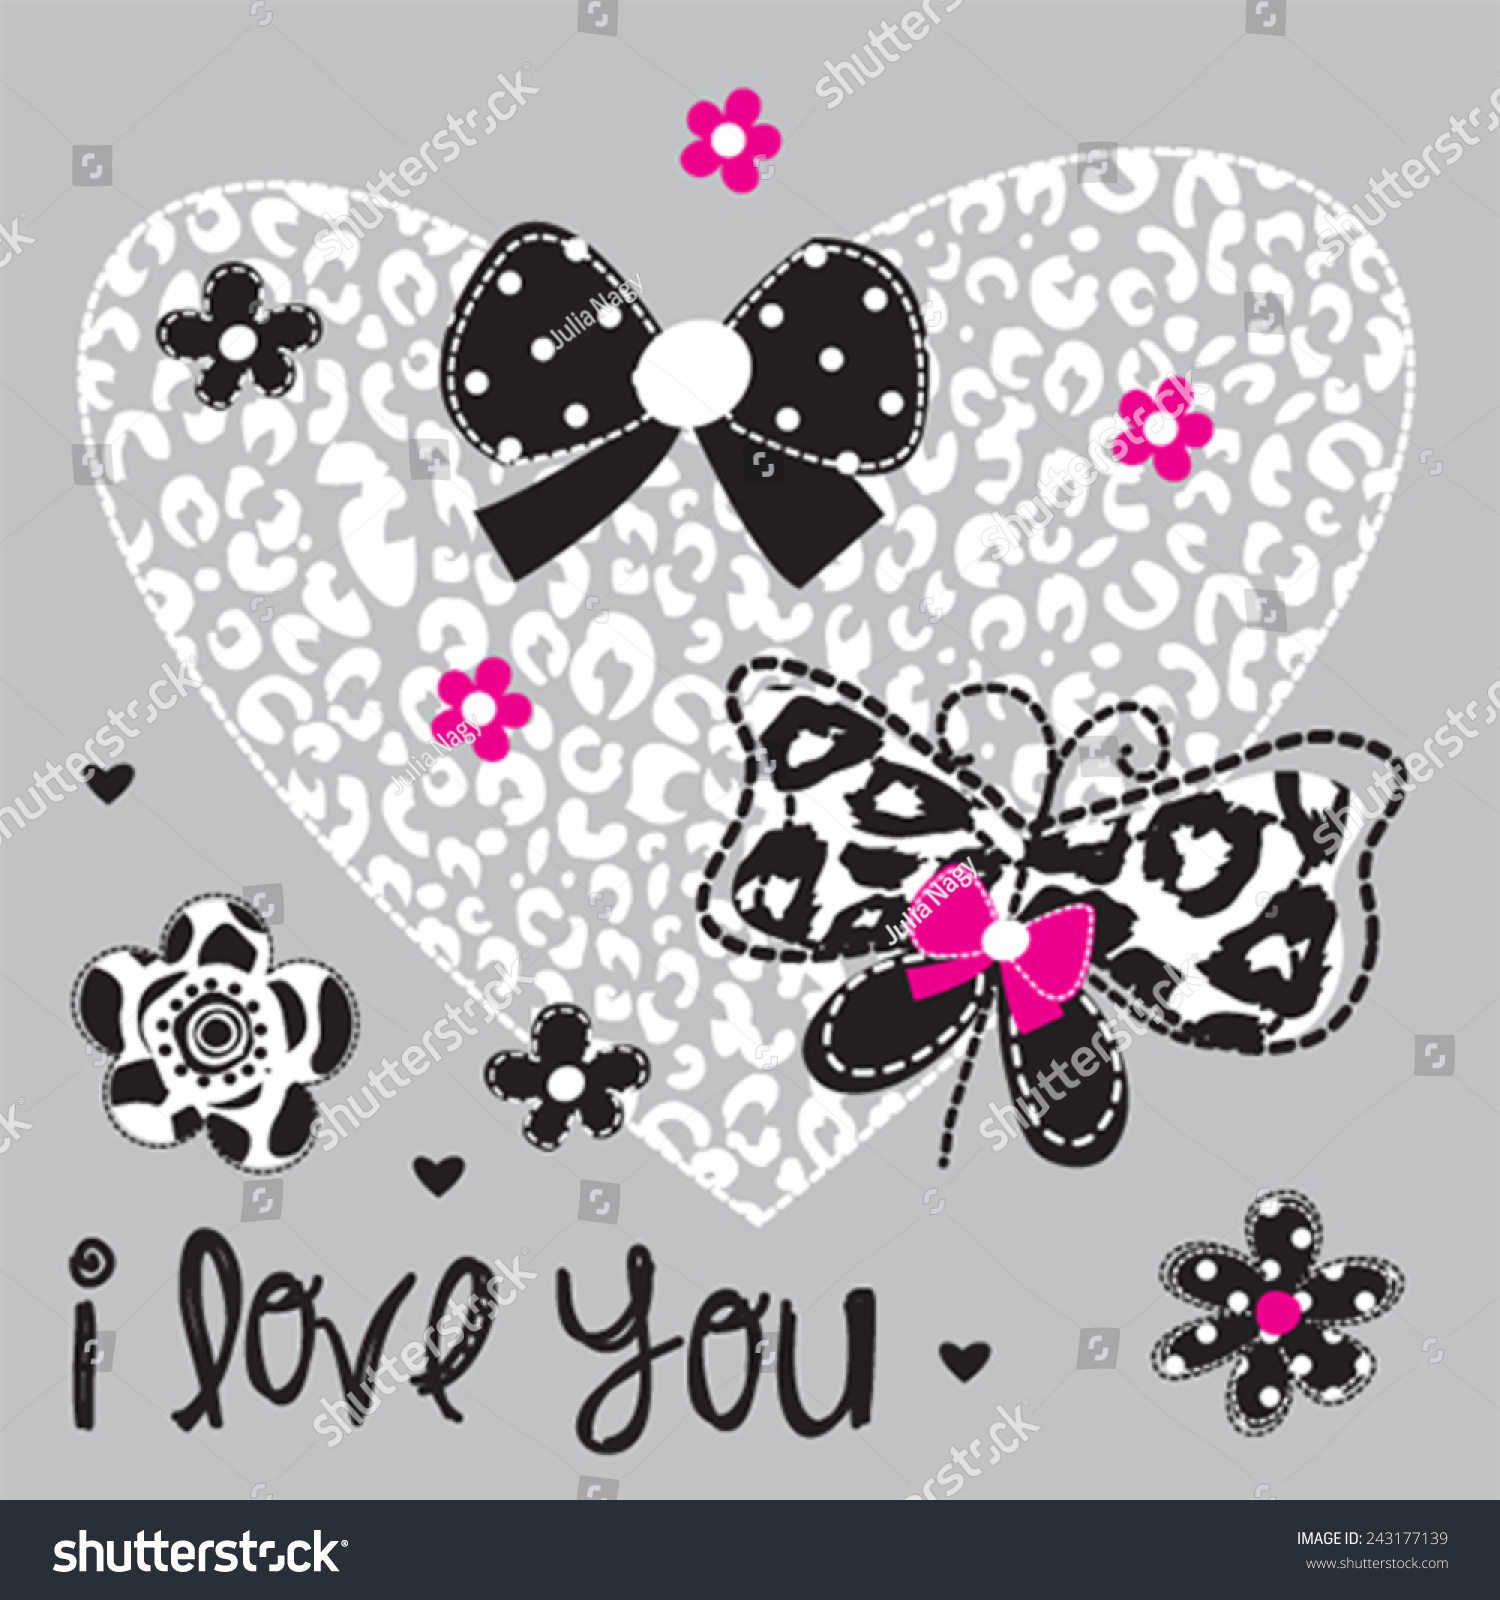 Beautiful Butterfly Heart Love Card Vector Stock Vector 243177139 ...